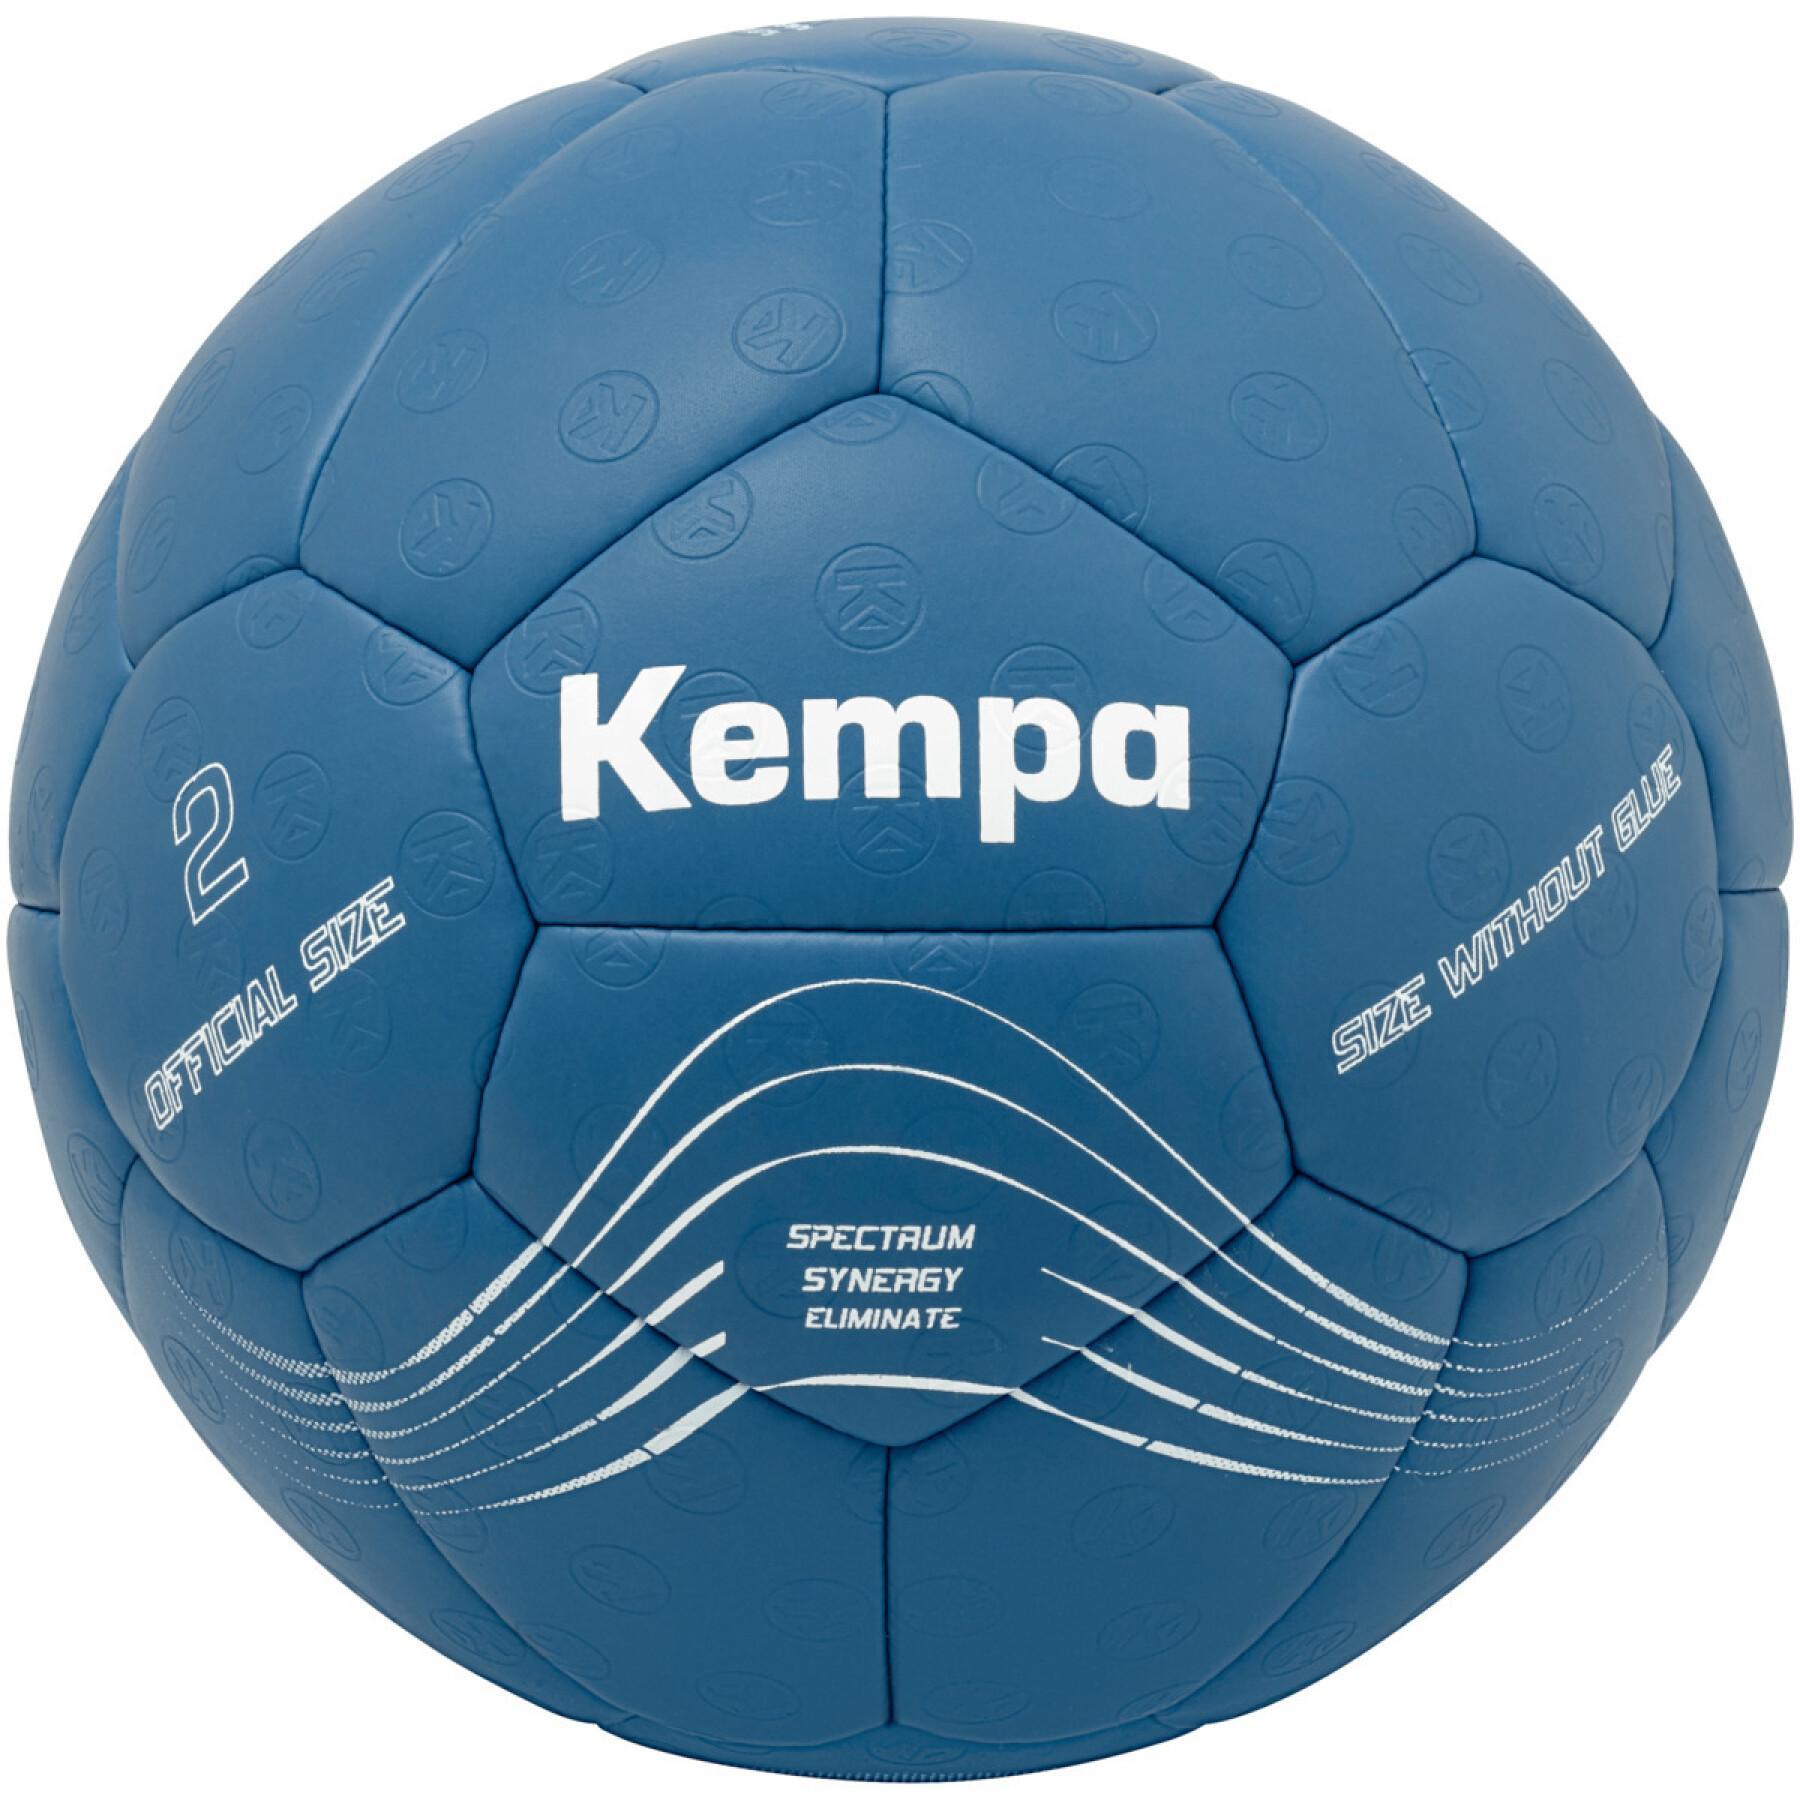 Training Handball Kempa Spectrum Synergy Eliminate